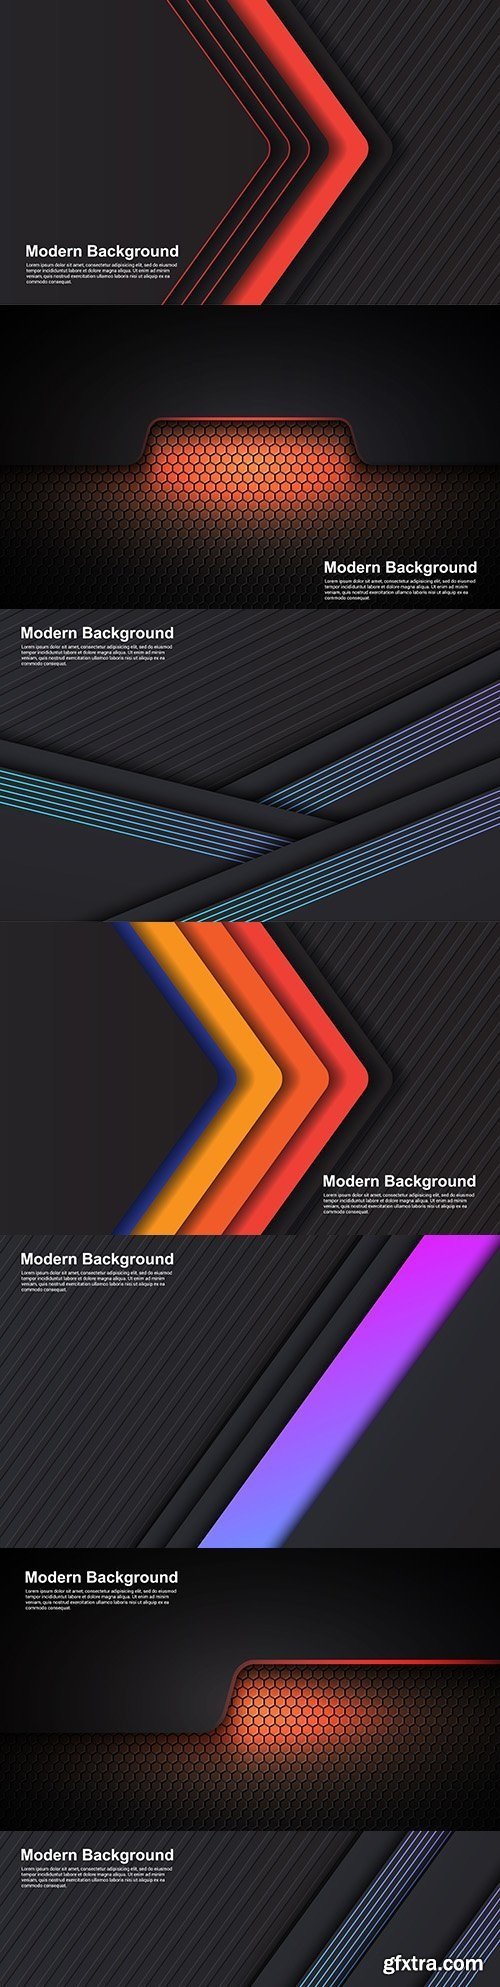 Modern design dark background with colored elements